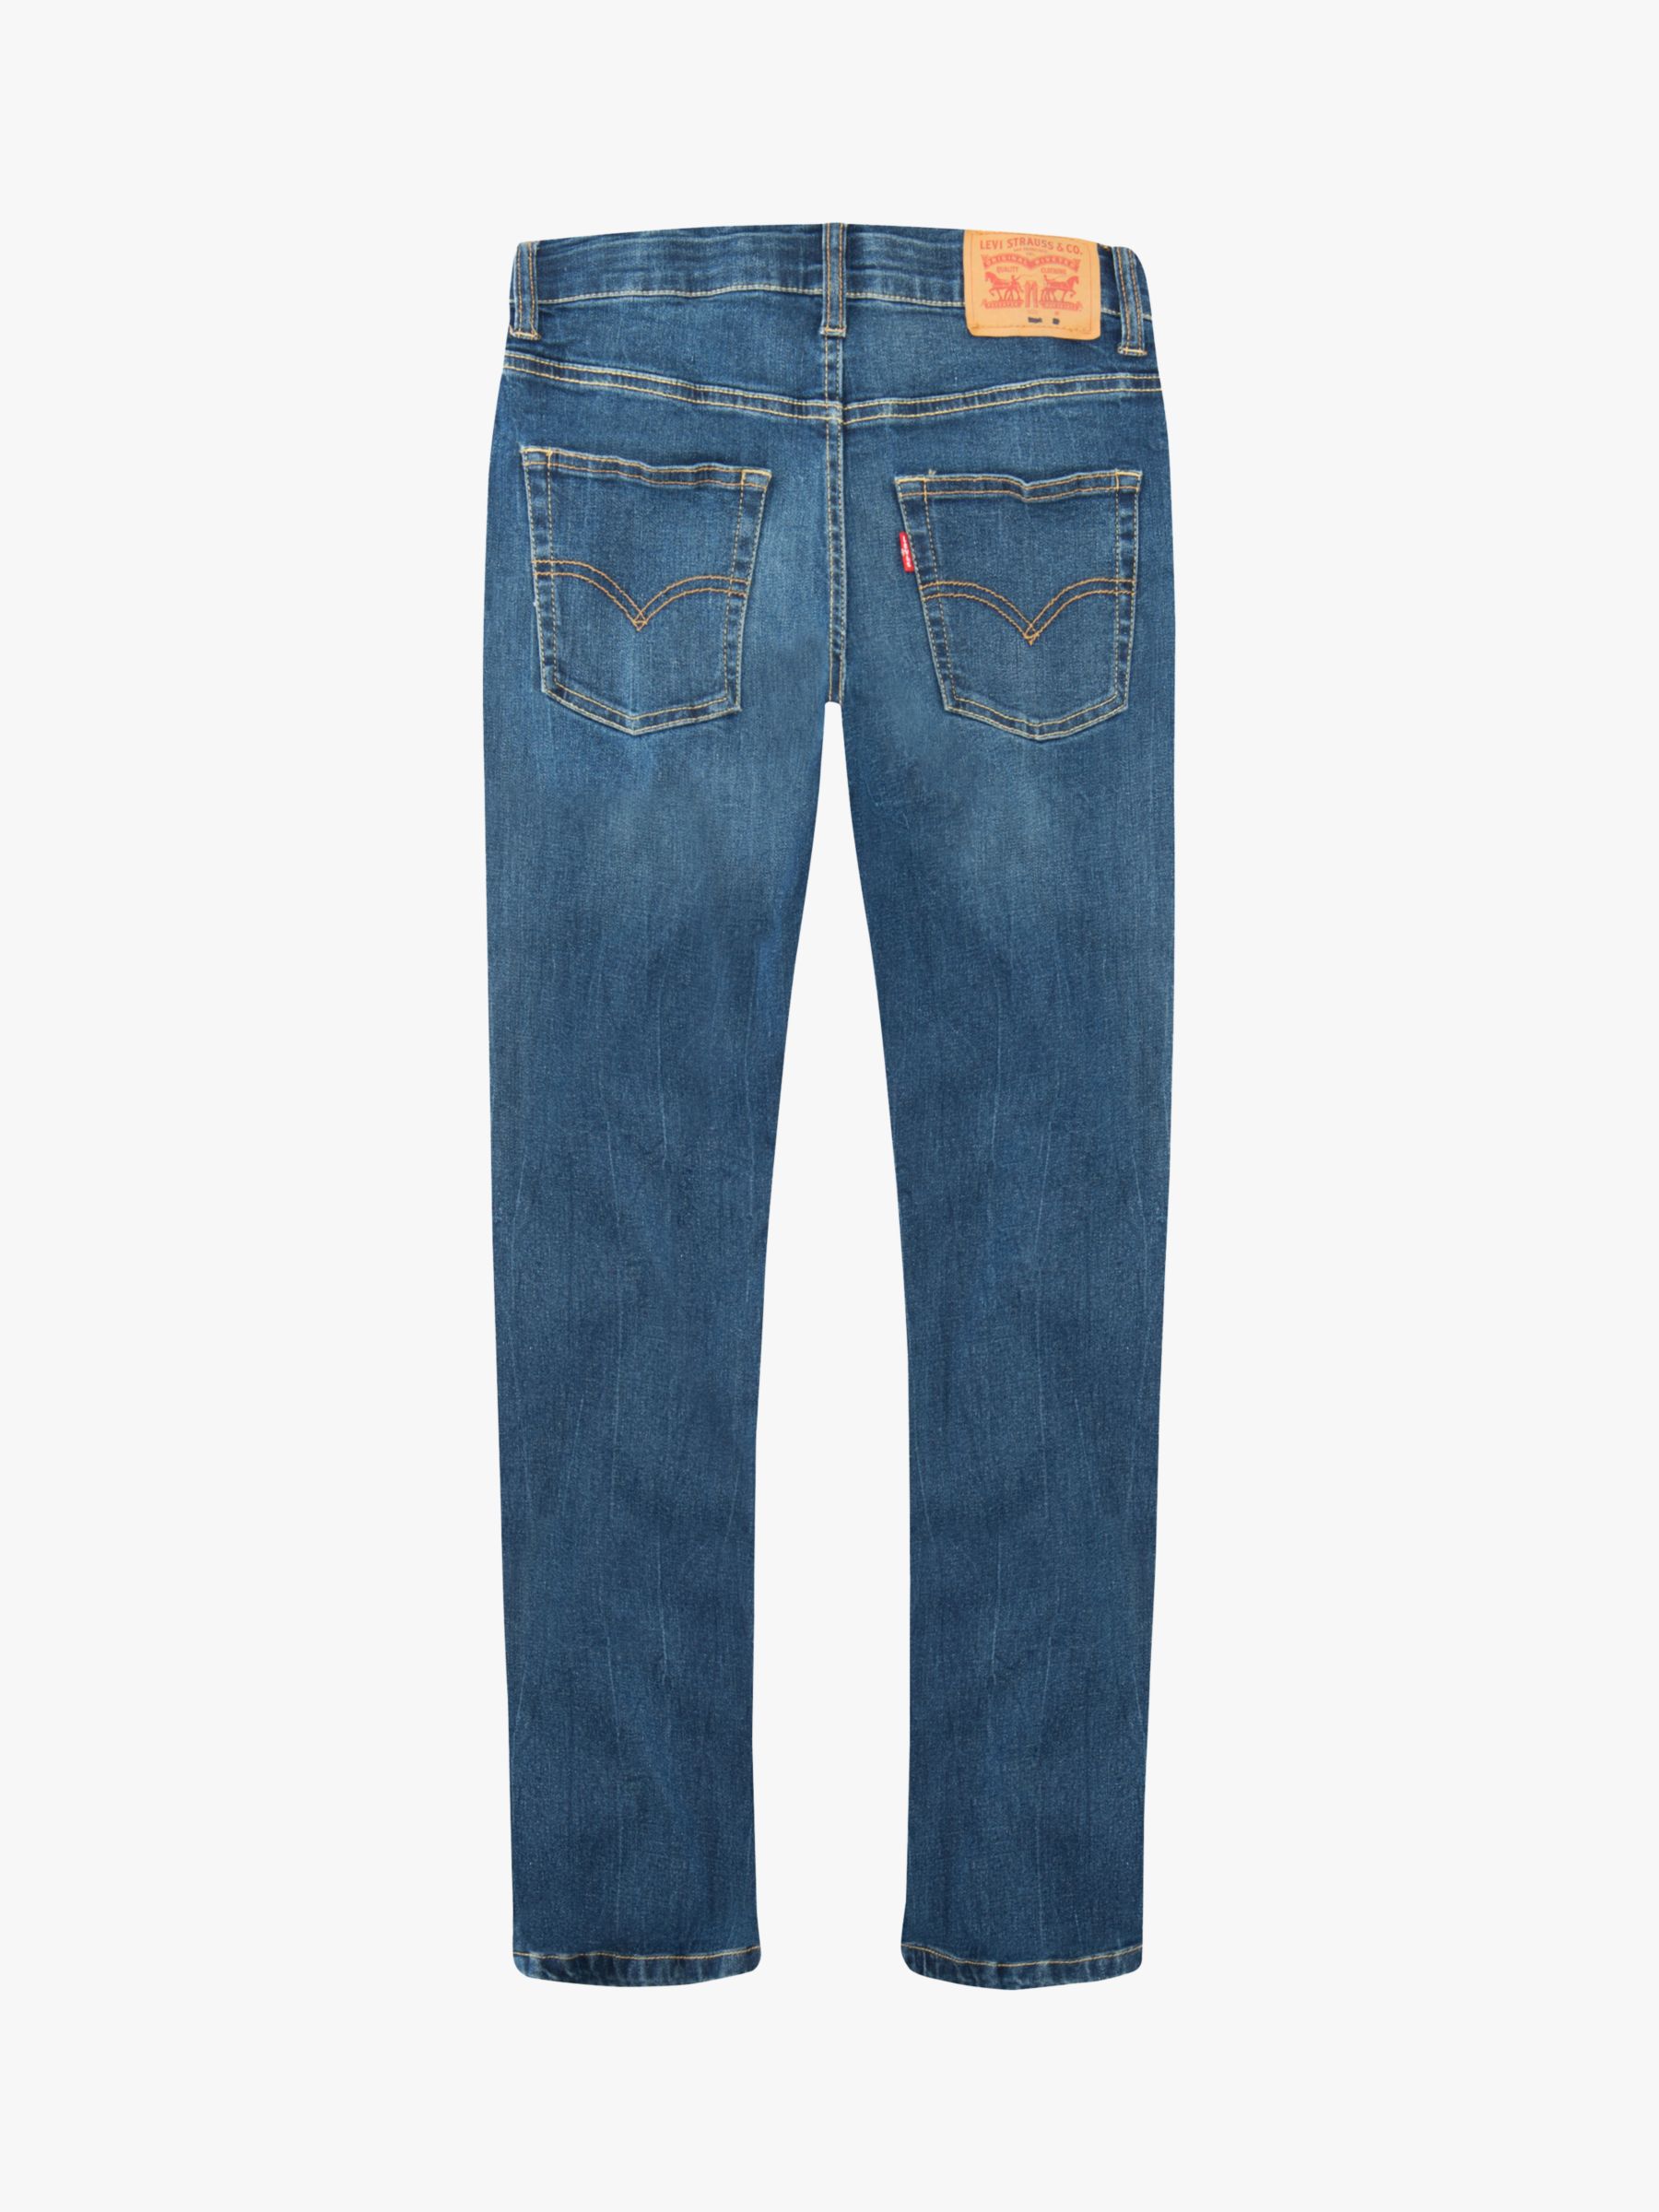 Levi Boys' 511 Slim Fit Jeans, Mid Blue at John Lewis & Partners